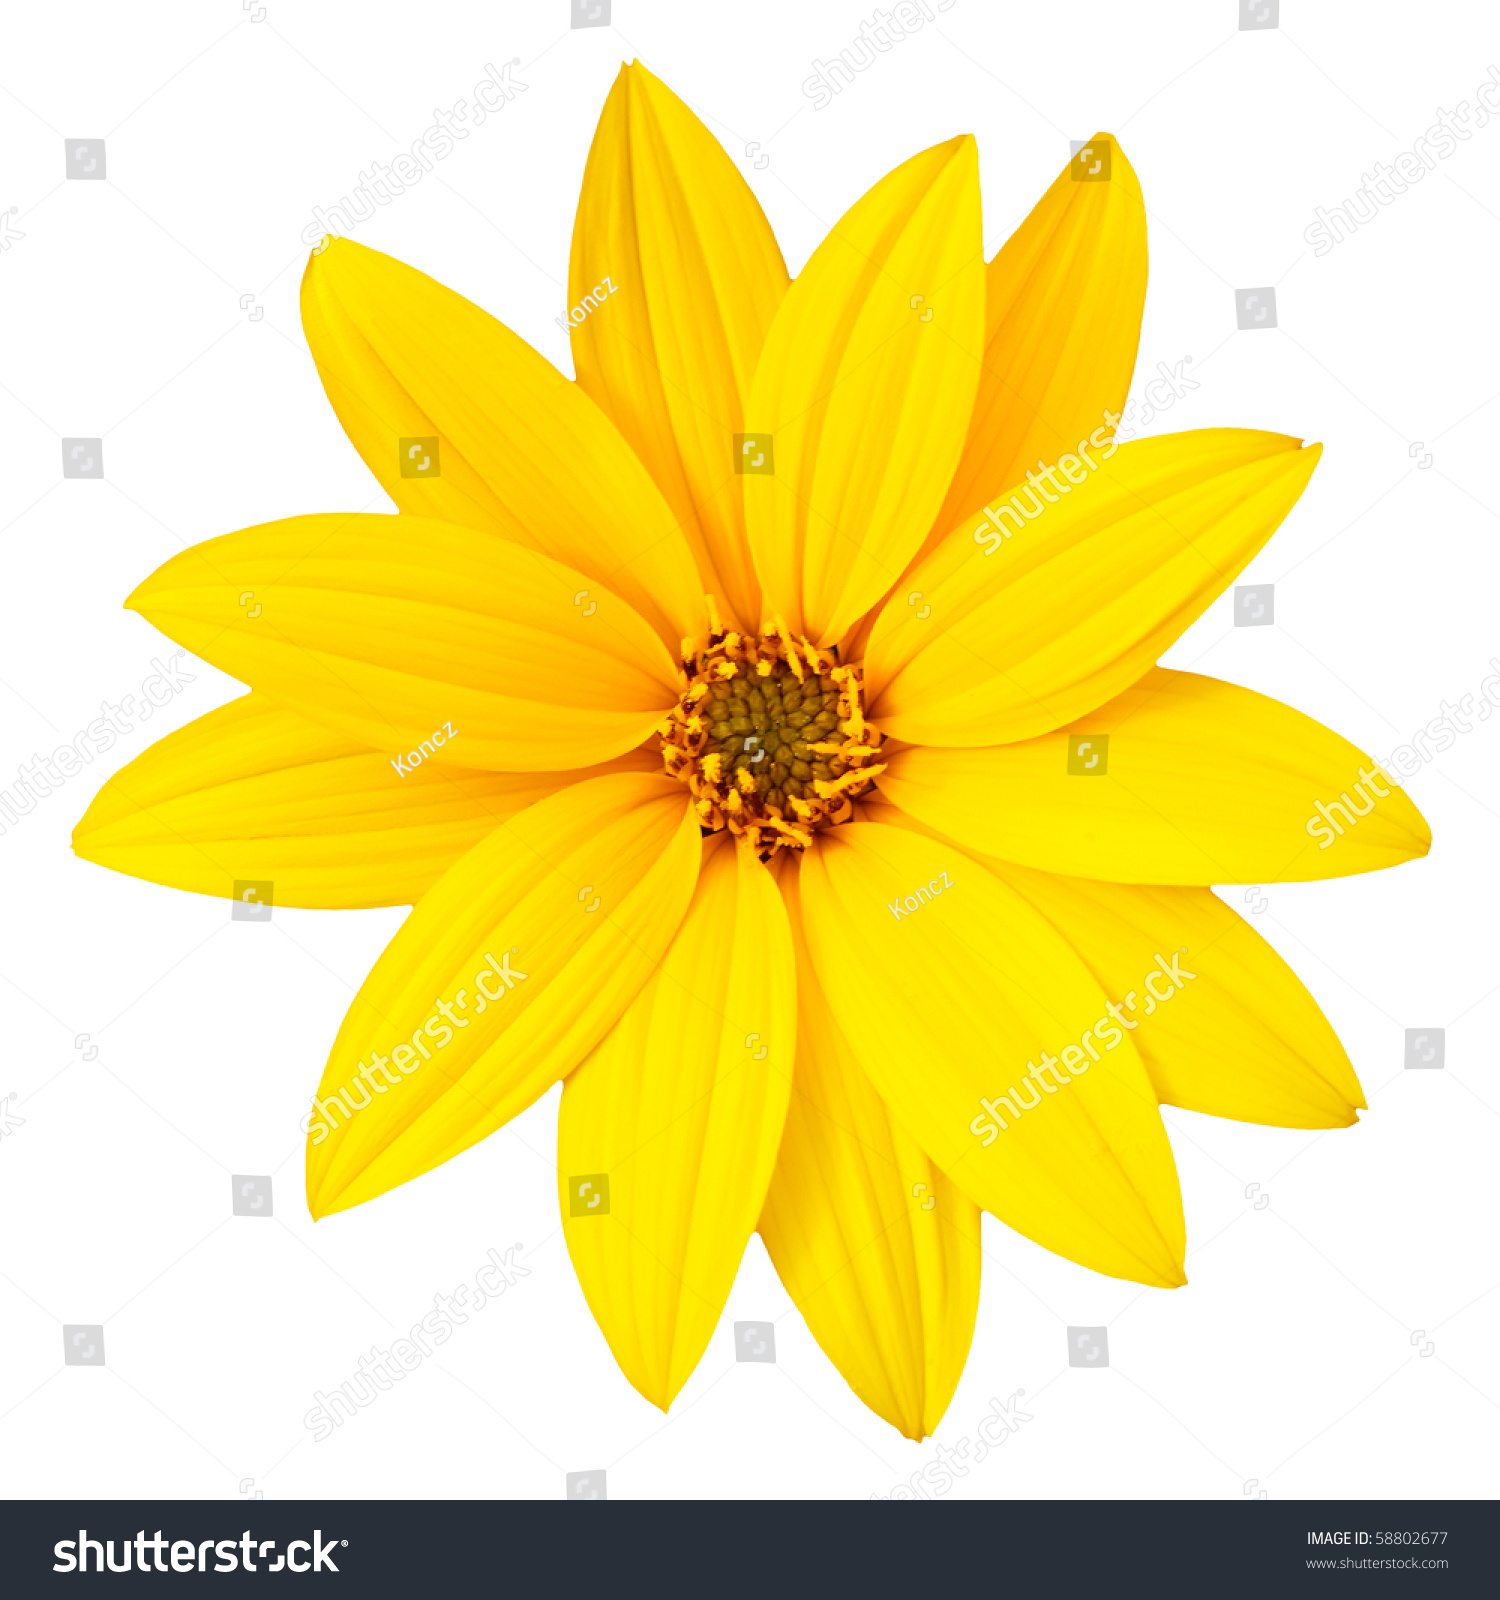 Yellow Flower Isolated On White Background Stock Photo ...
